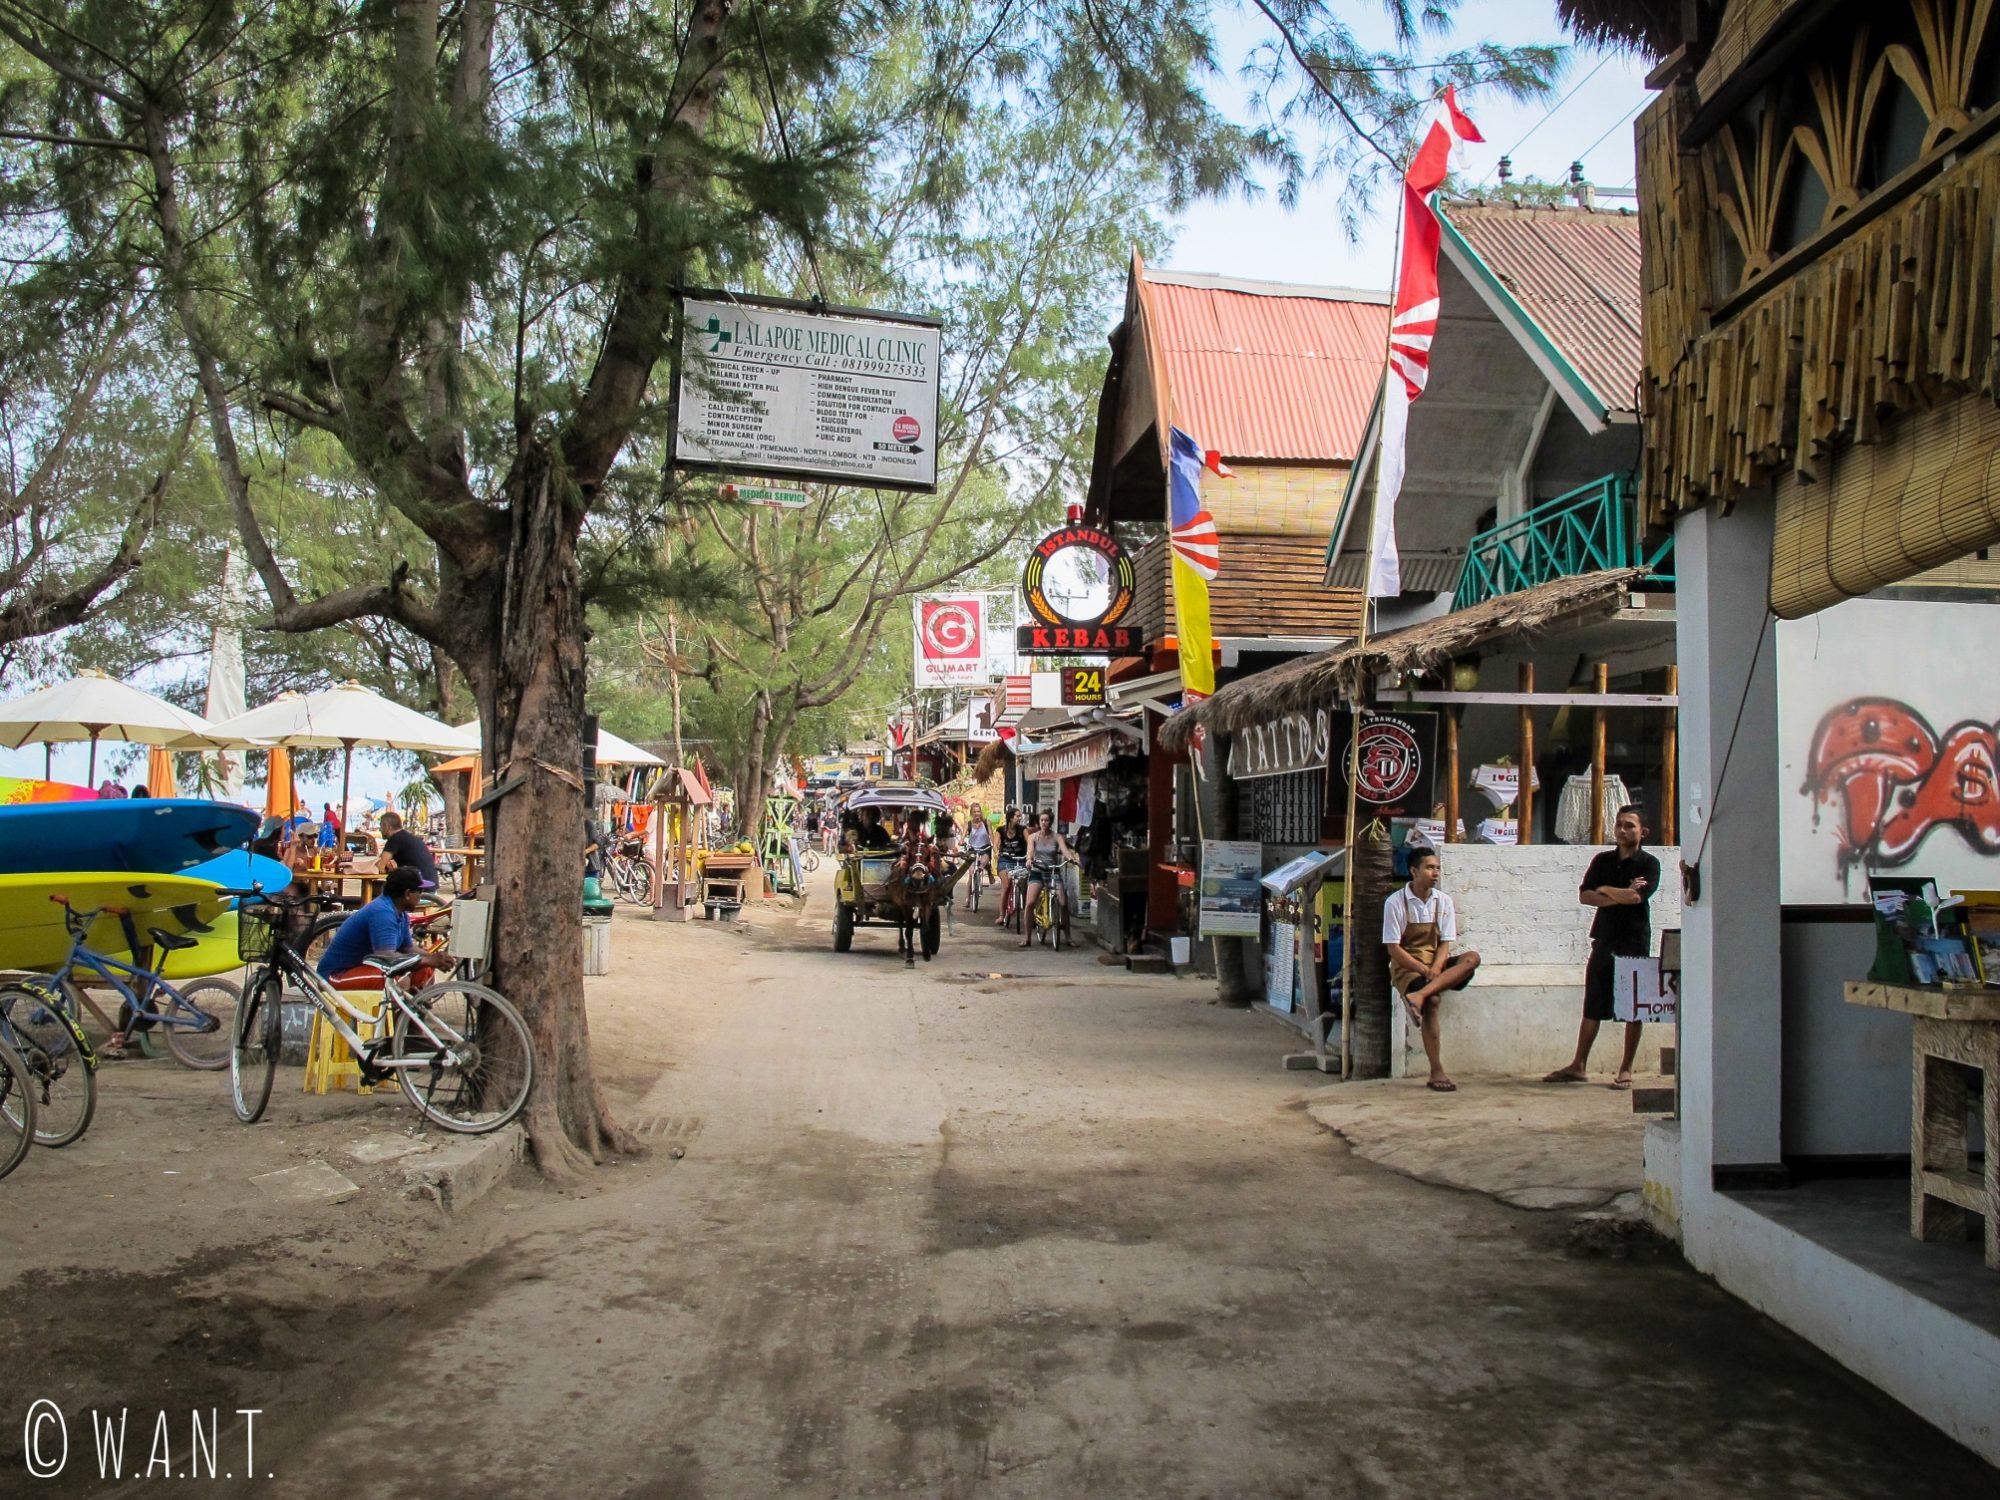 2017 - Rue principale du village de Gili Trawangan